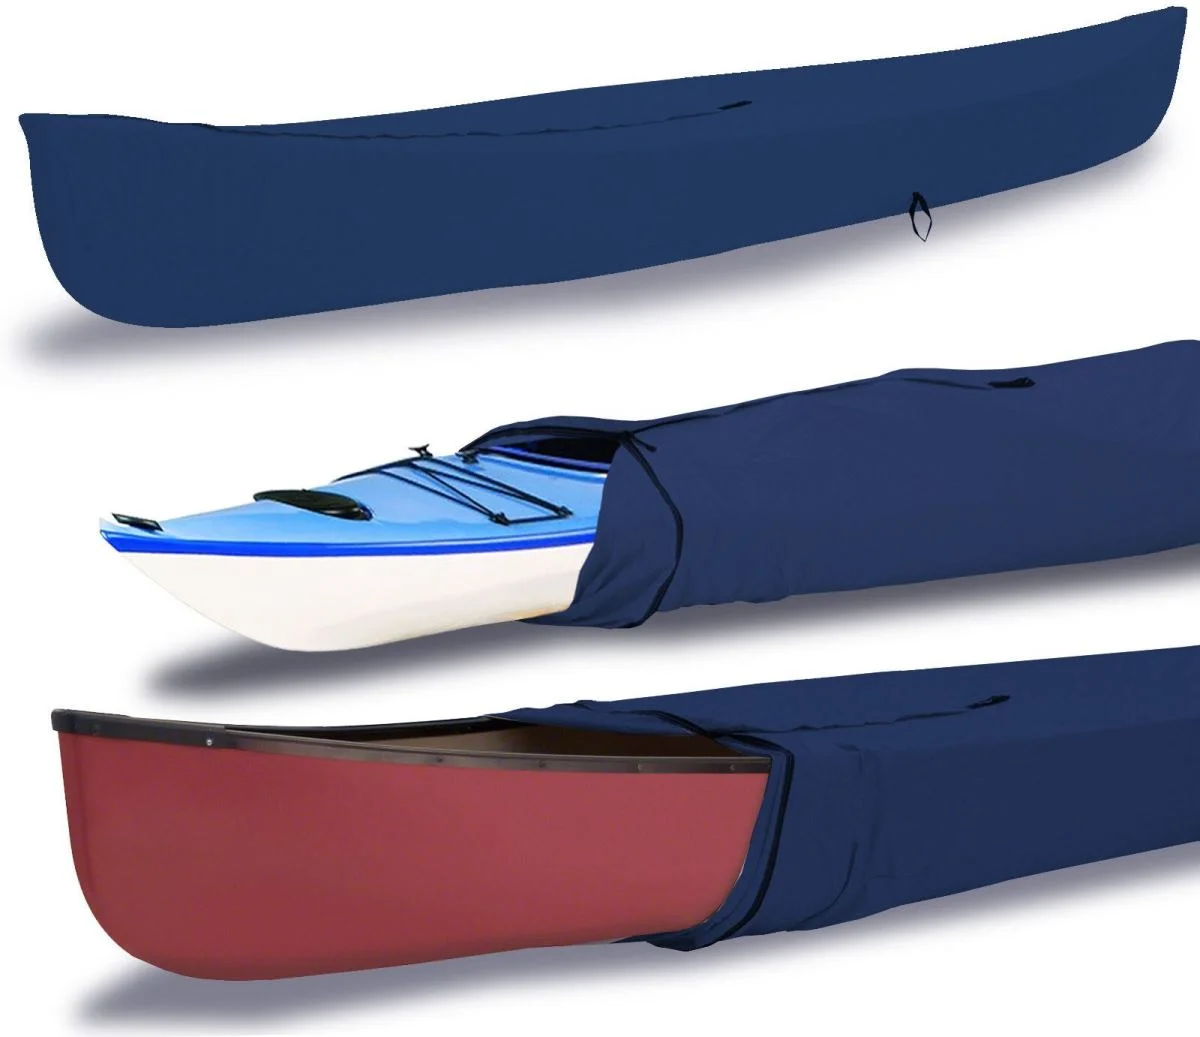 Galapare Kayak Storage Cover,Professional Universal Kayak Boat Cover Canoe Boat Waterproof UV Resistant Dust Storage Cover Shield 